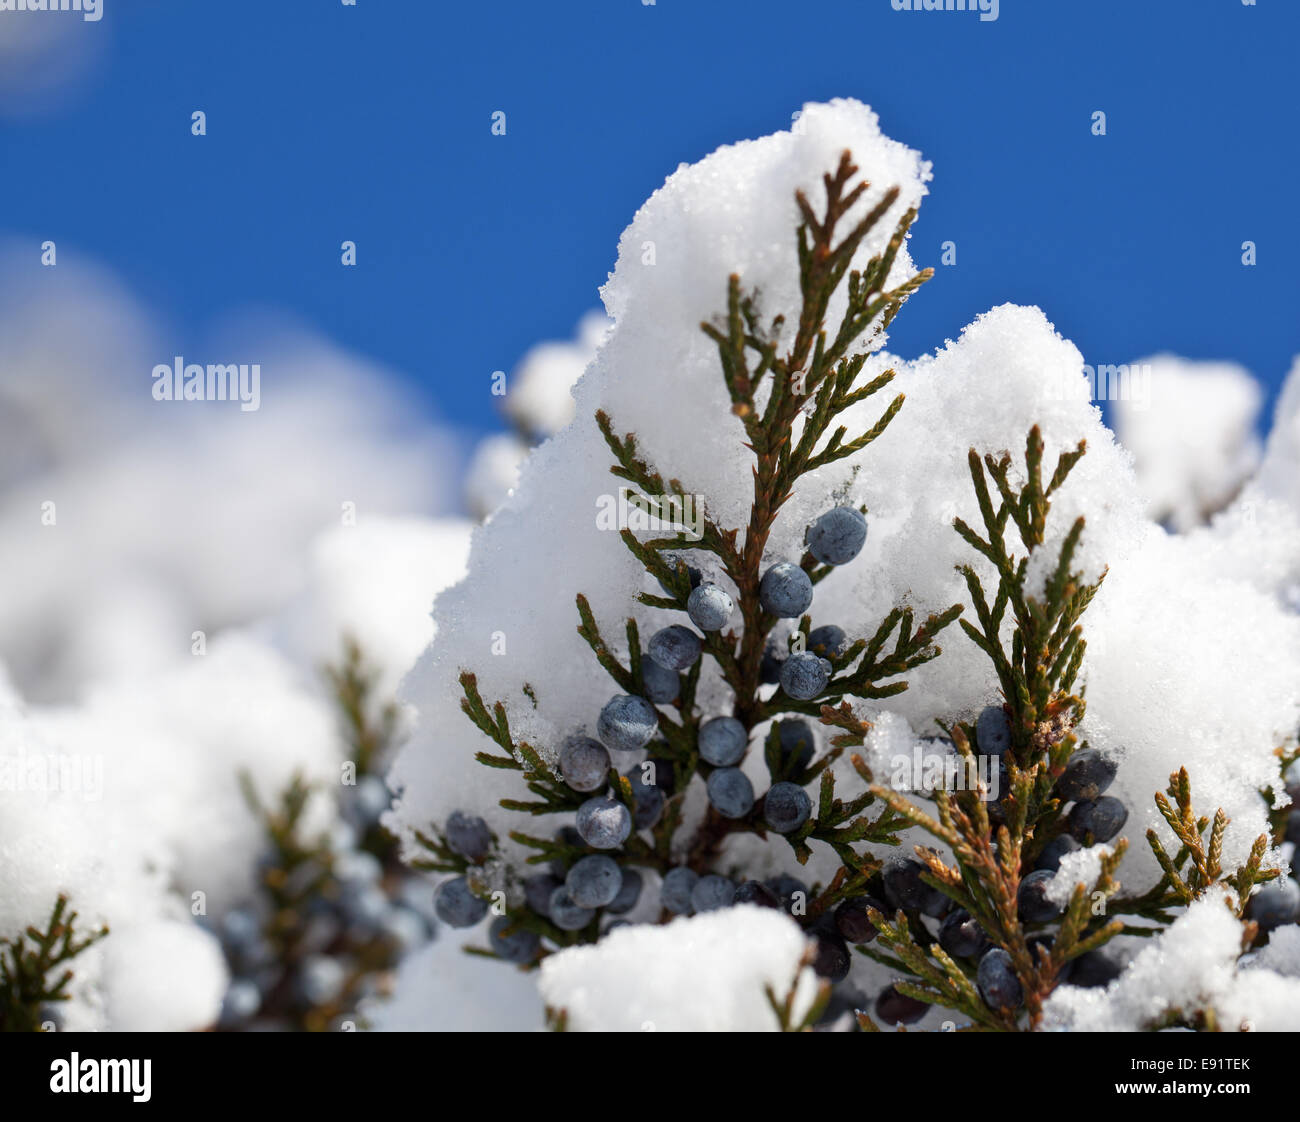 Snow falling on blue pine berries Stock Photo